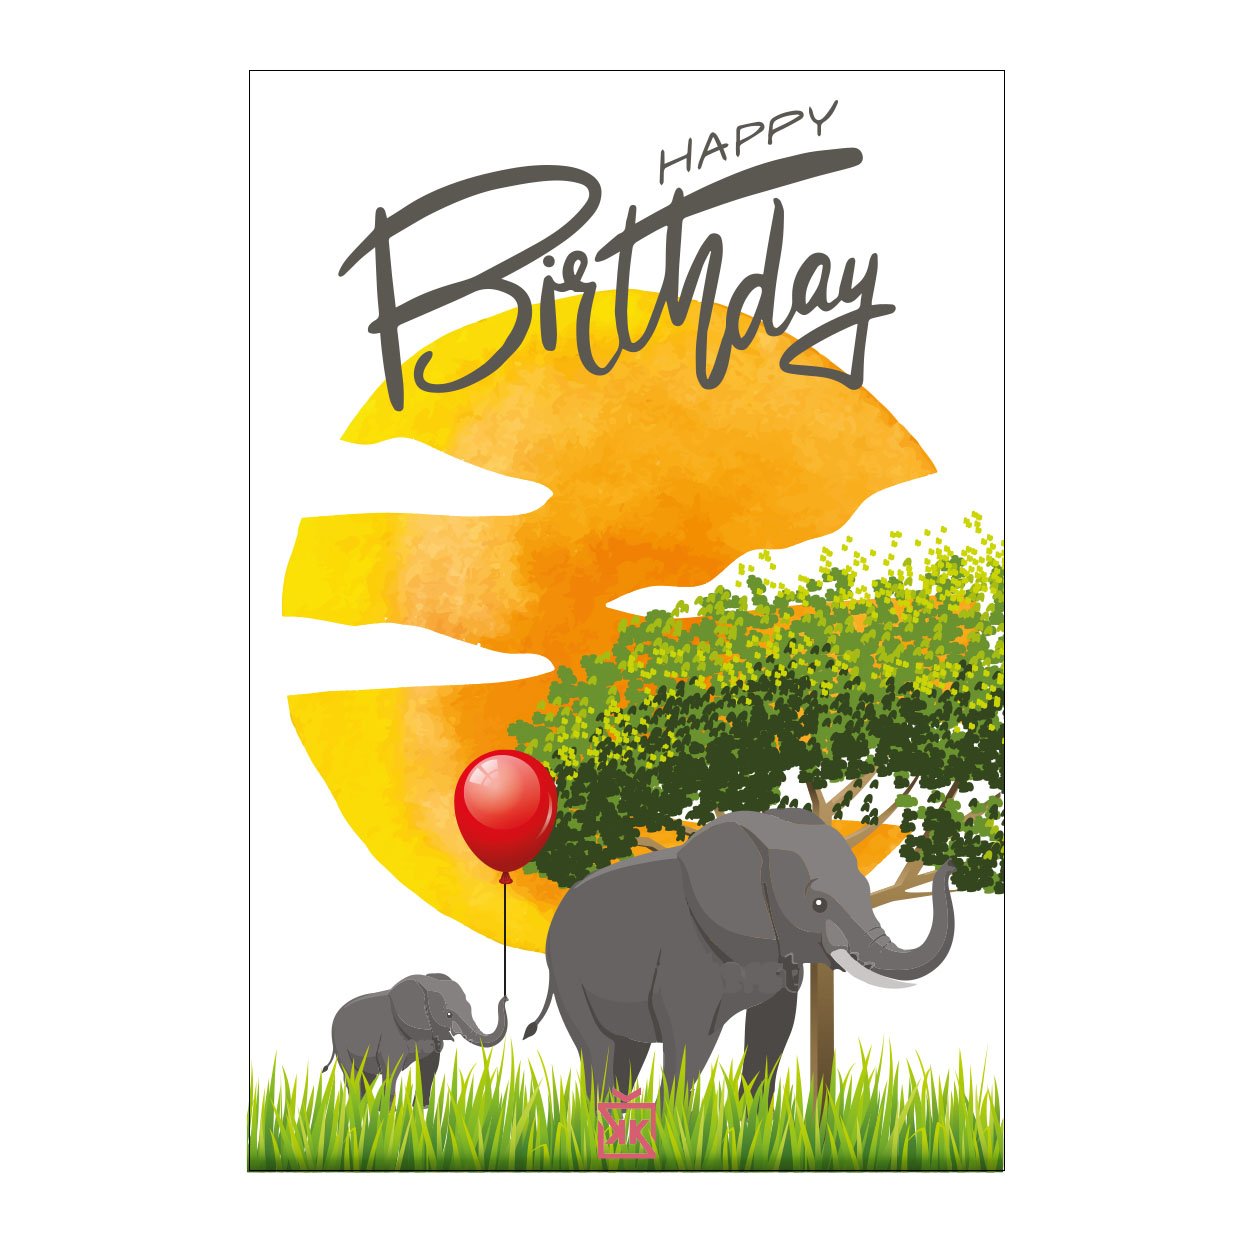 540707-happy-birthday-elephant-motto-karti